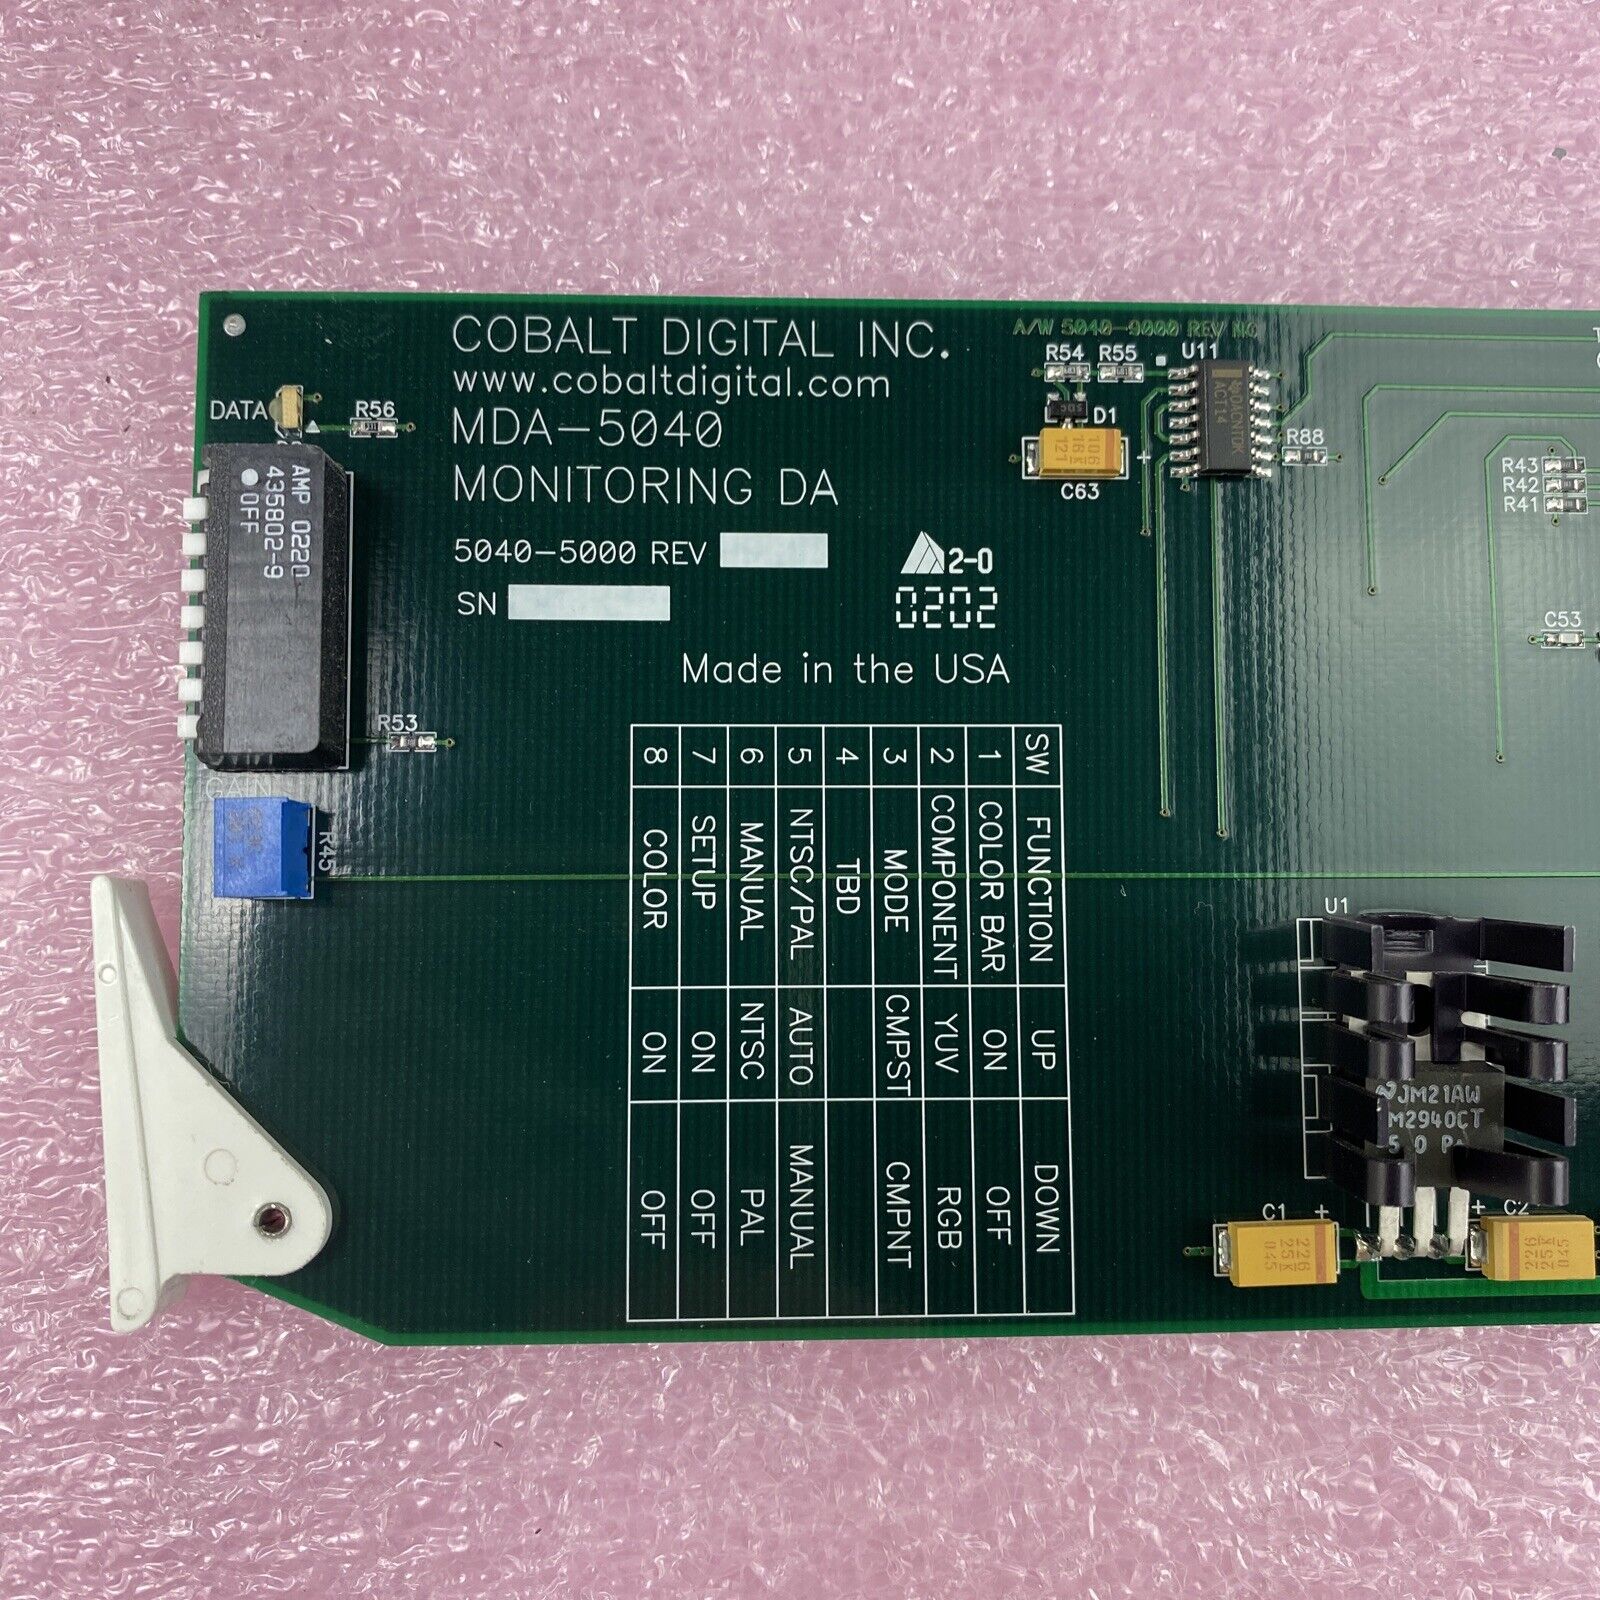 Cobalt Digital MDA-5040 Monitoring DA card